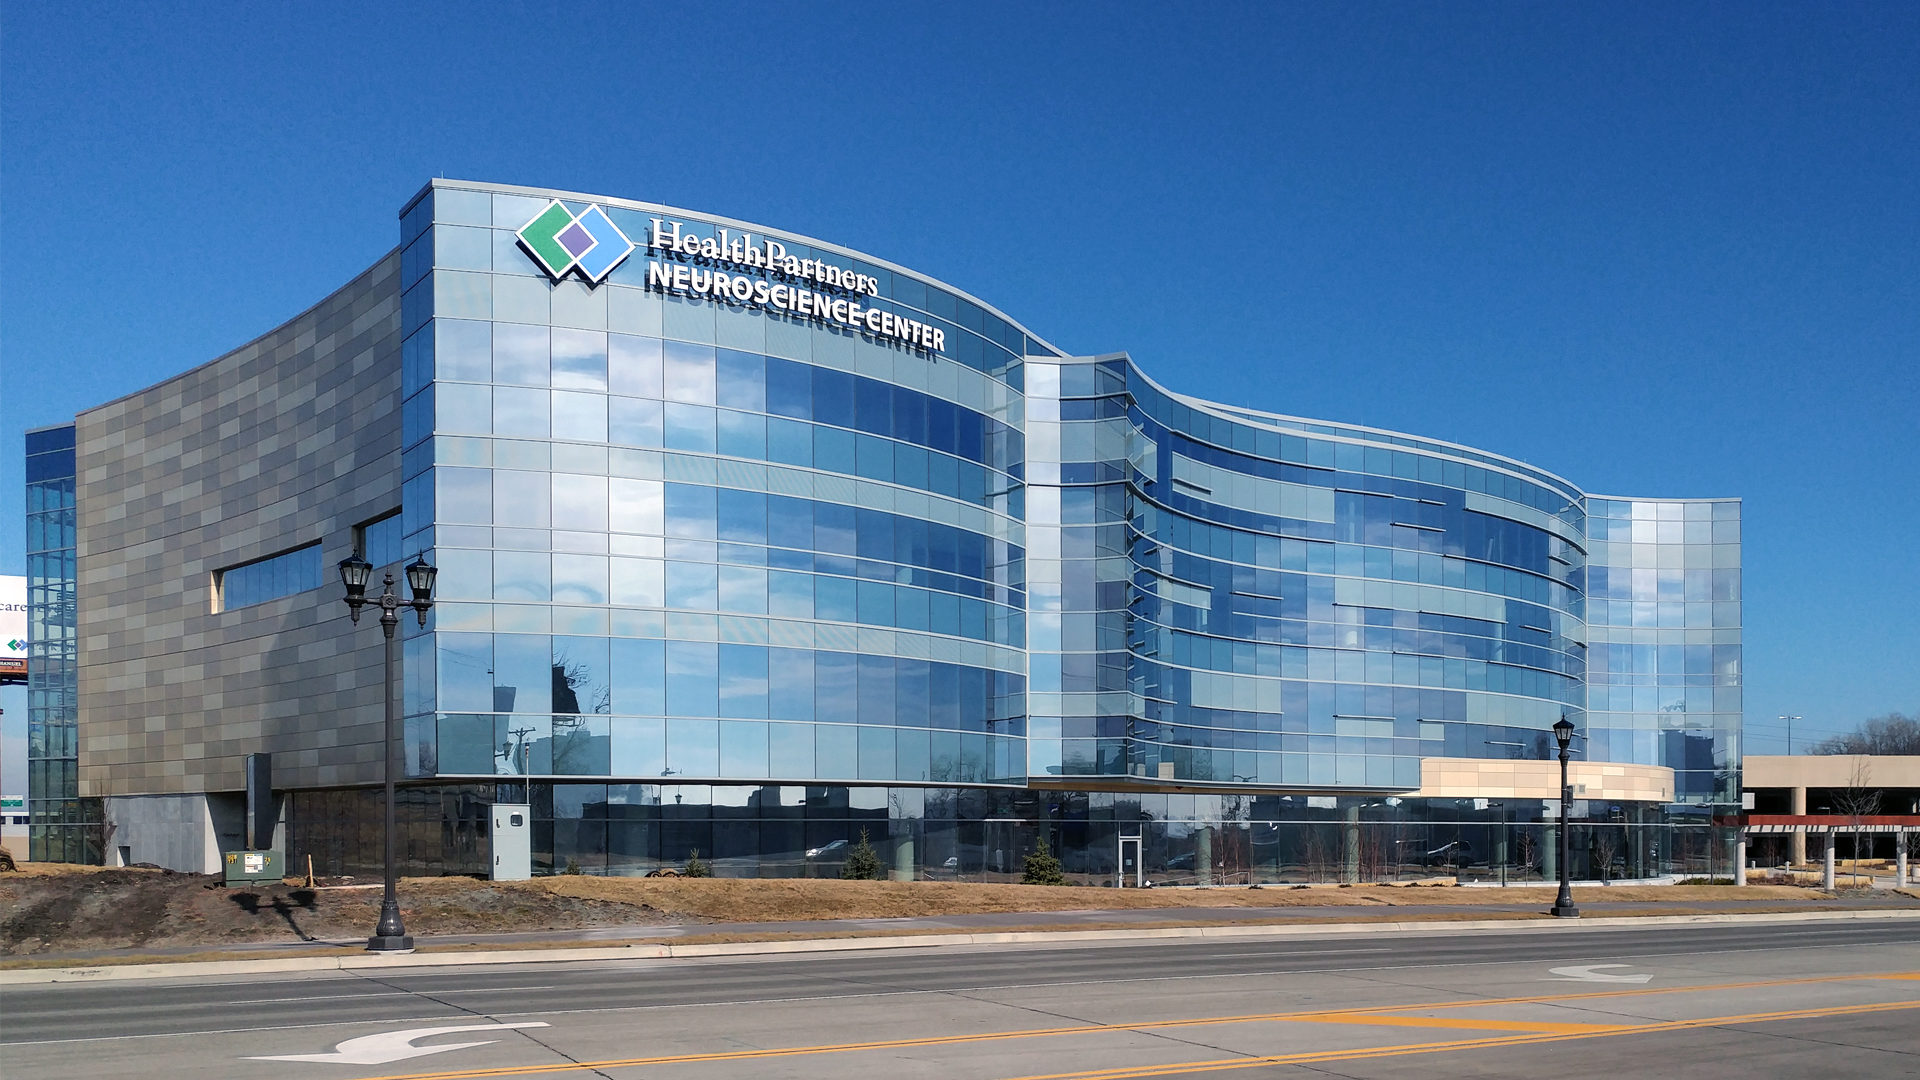 HealthPartners Neuroscience Center Exterior View of Glass Facade